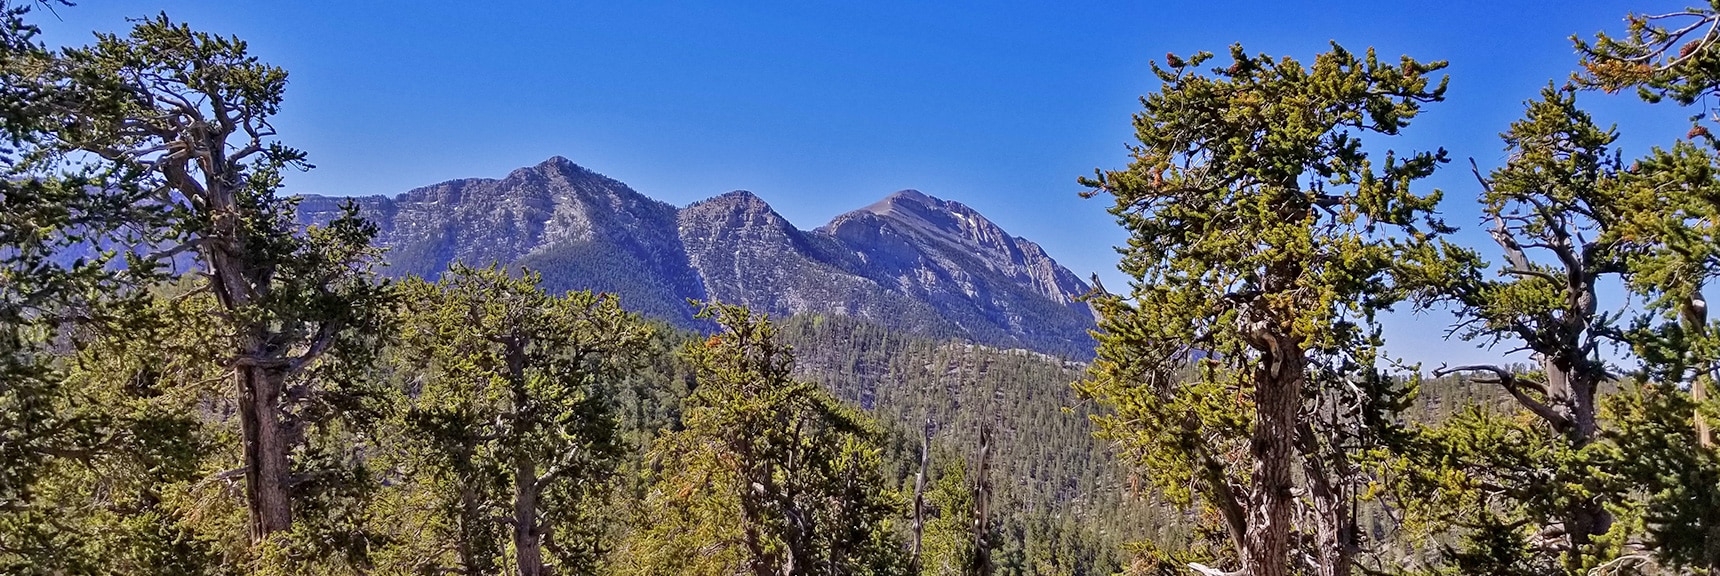 Lee Peak and Charleston Peak Viewed from the Bonanza Trail | Base of McFarland Peak via Bristlecone Pine Trail and Bonanza Trail | Lee Canyon | Spring Mountains, Nevada